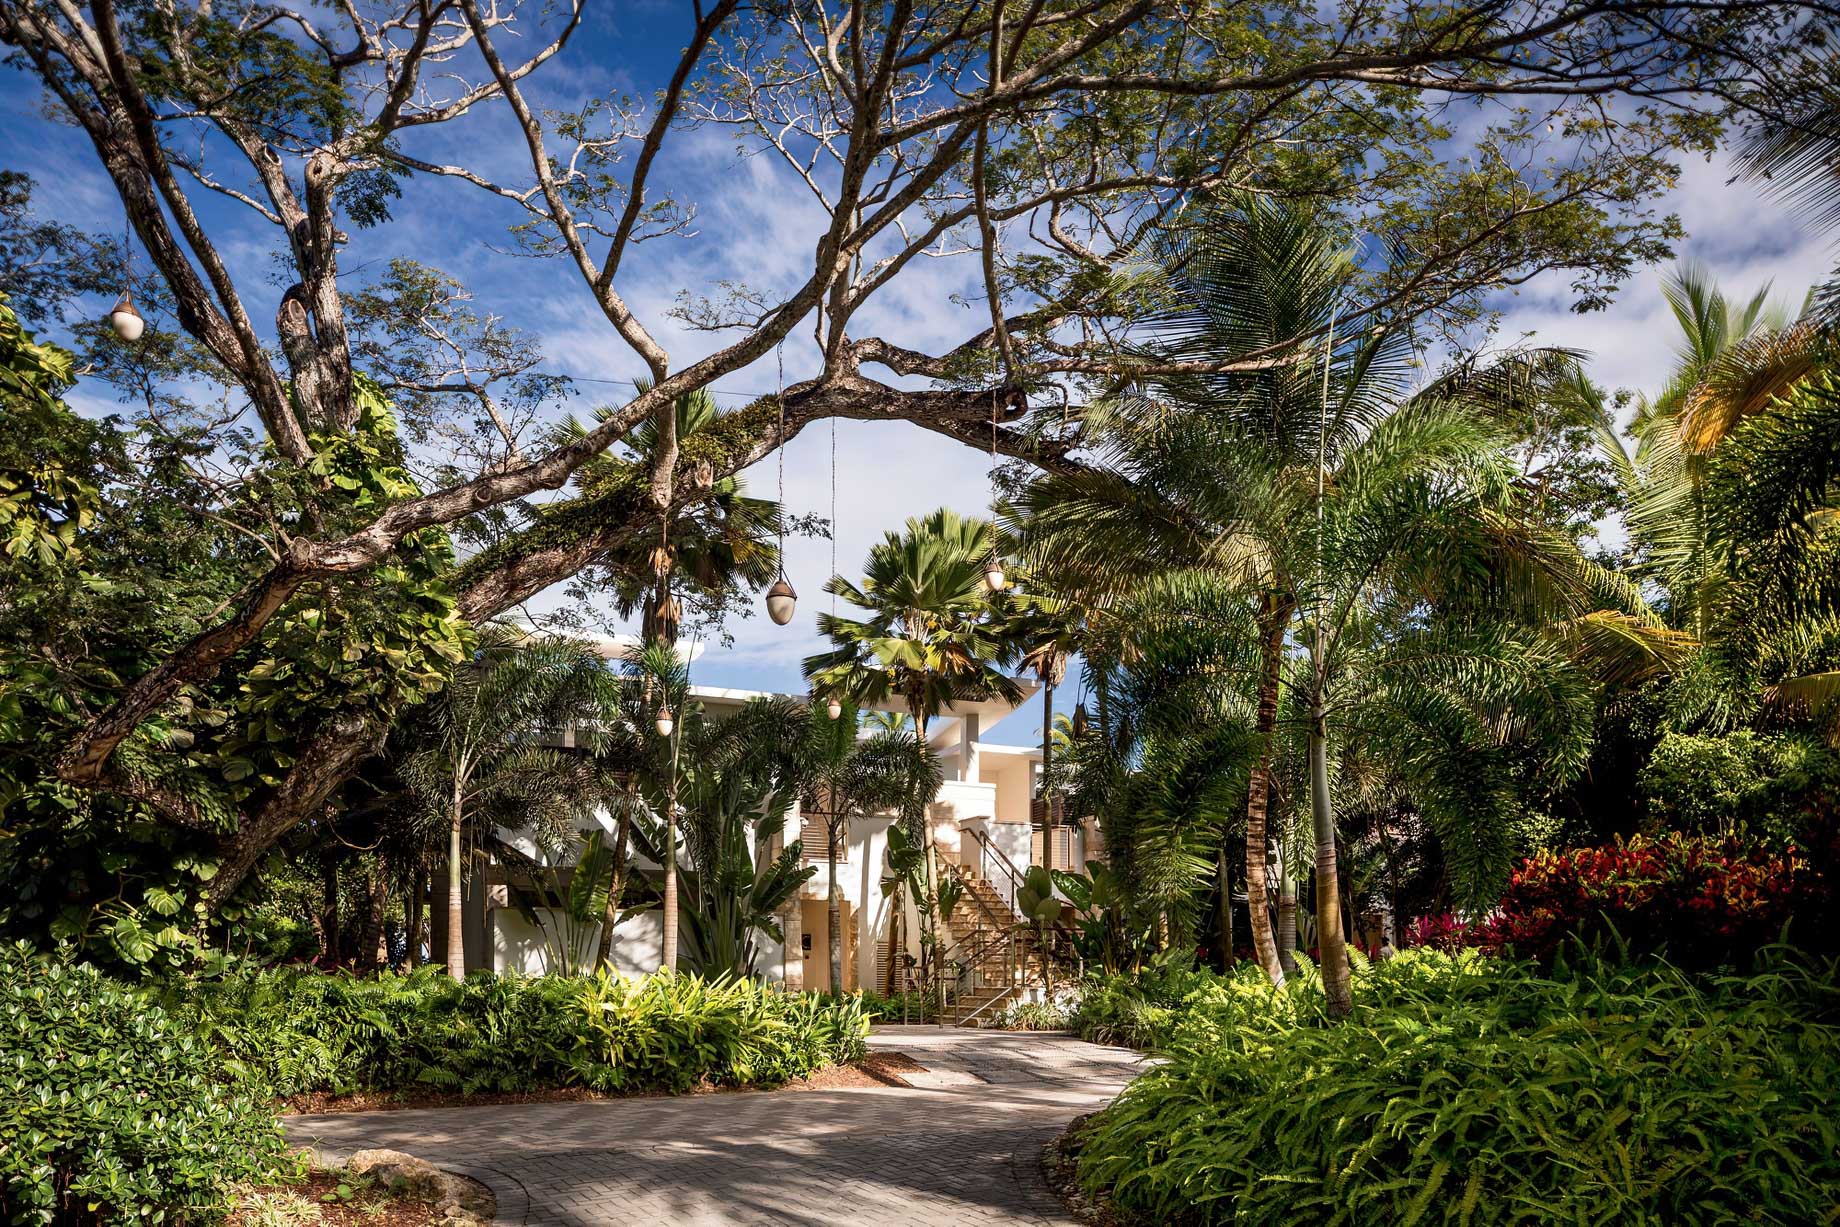 The Ritz-Carlton, Dorado Beach Reserve Resort - Puerto Rico - Accommodation Exterior View